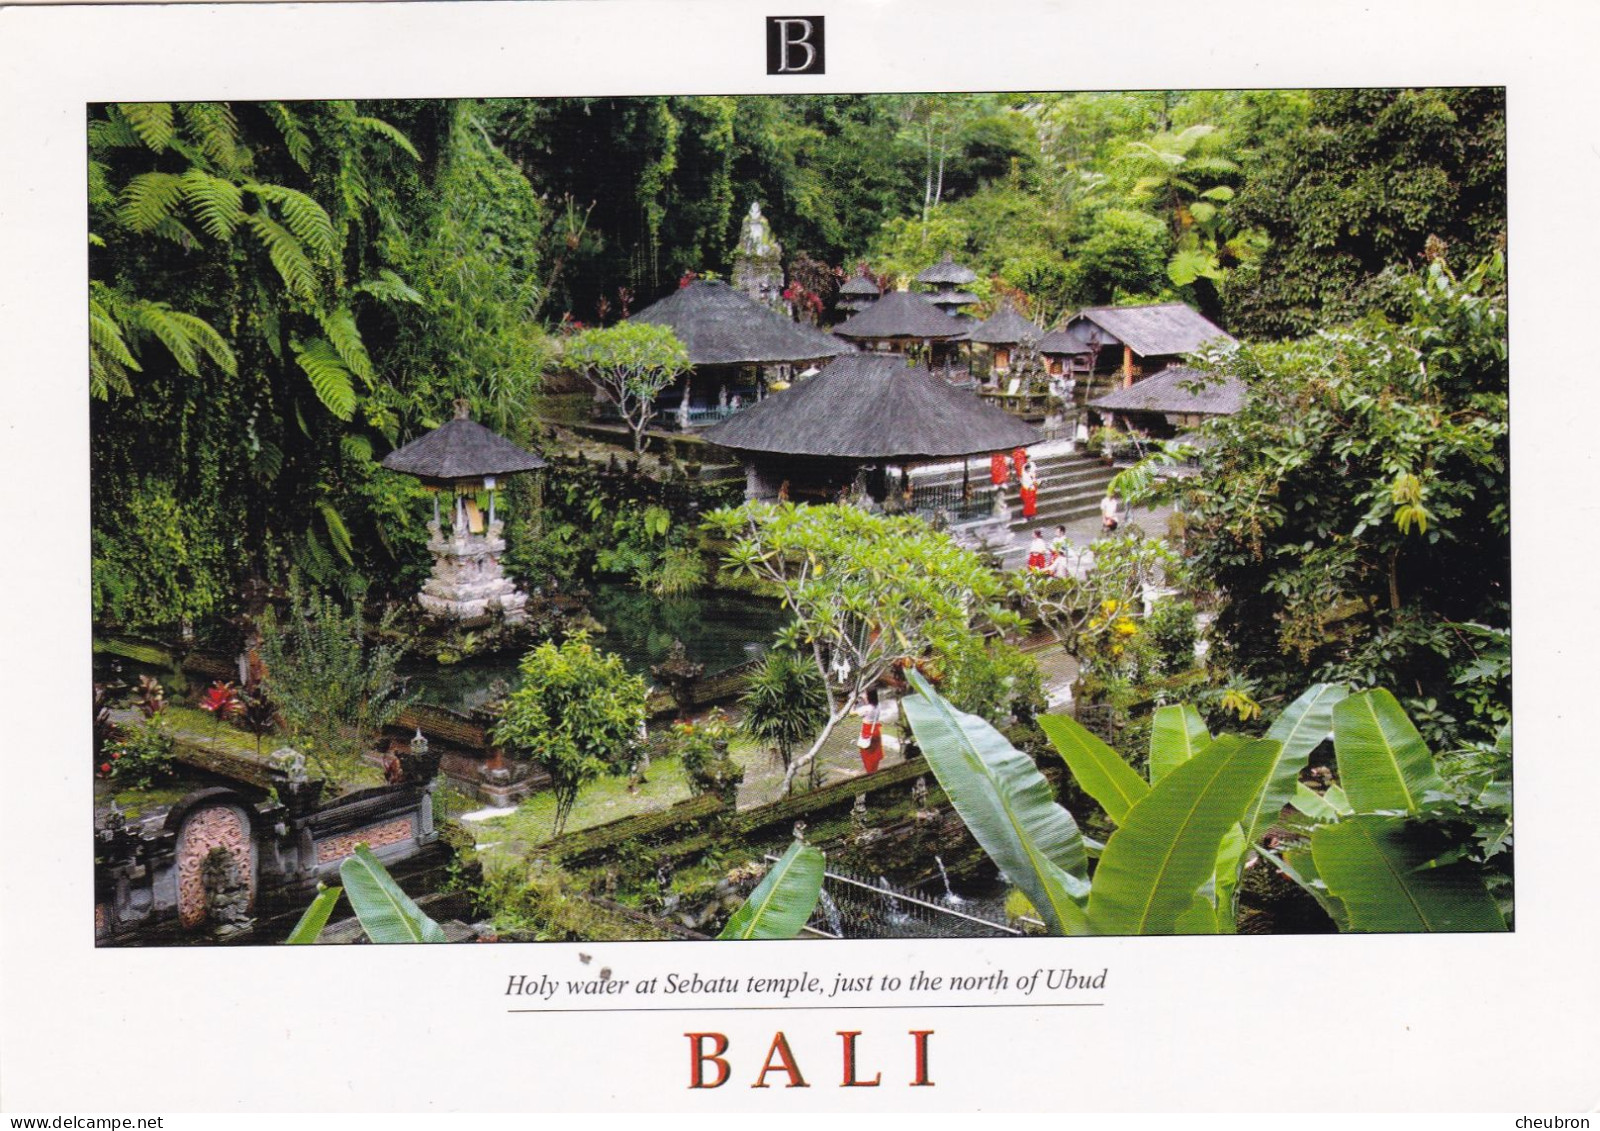 INDONESIE. BALI (ENVOYE DE). " HOLI WATER  AT SEBATU TEMPLE  ".ANNEE 2009 + TEXTE + TIMBRES. FORMAT 16.5x11.5 Cm - Indonesië